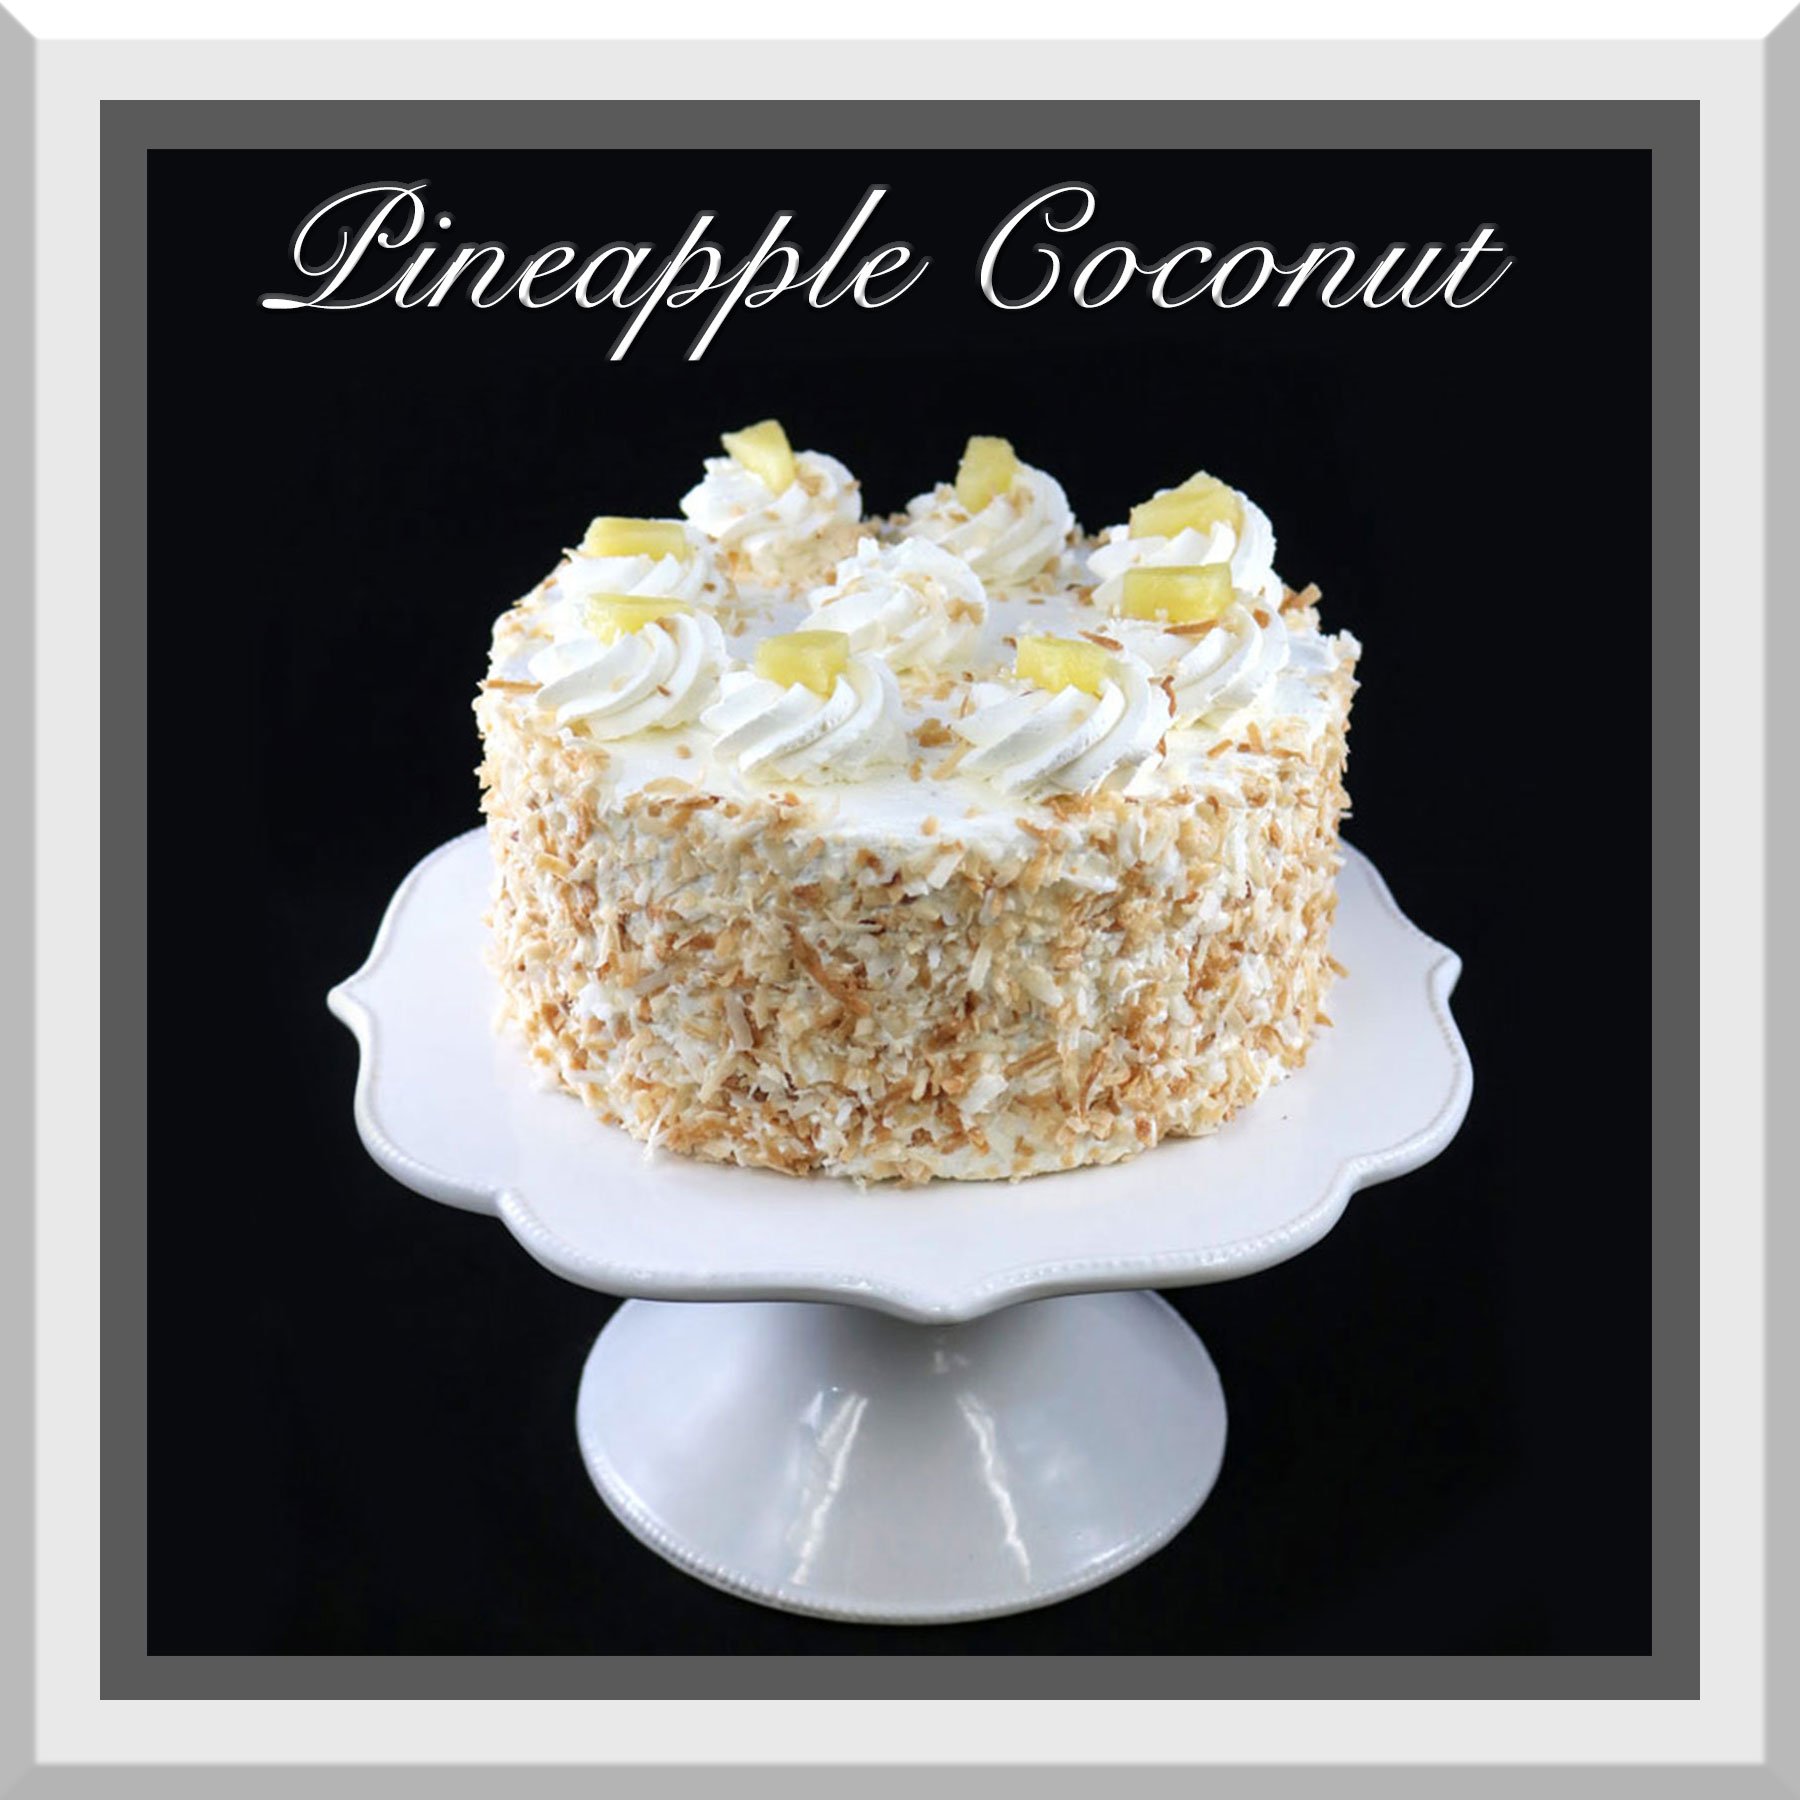 Pineapple tree cake Recipe by Kirti Verma - Cookpad